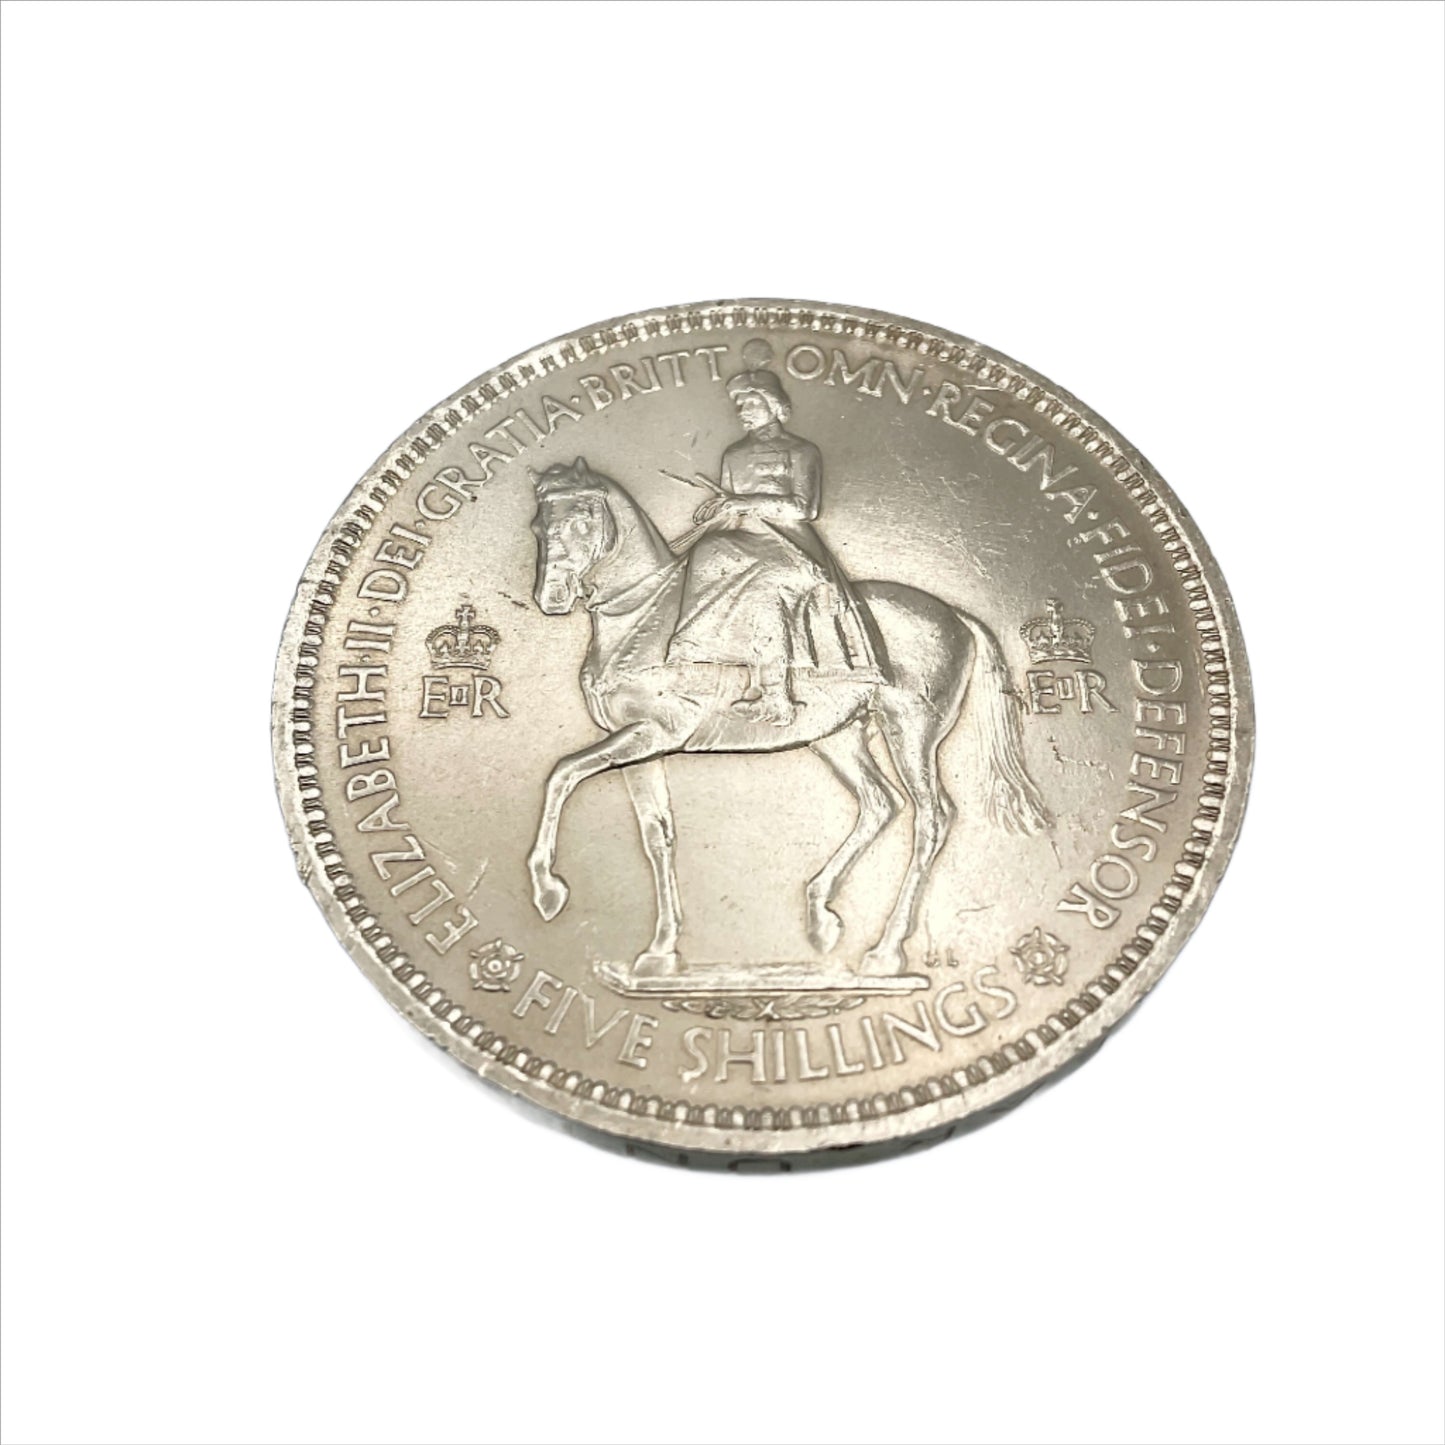 Reverse of 1953 Queen Elizabeth II coronation Coin